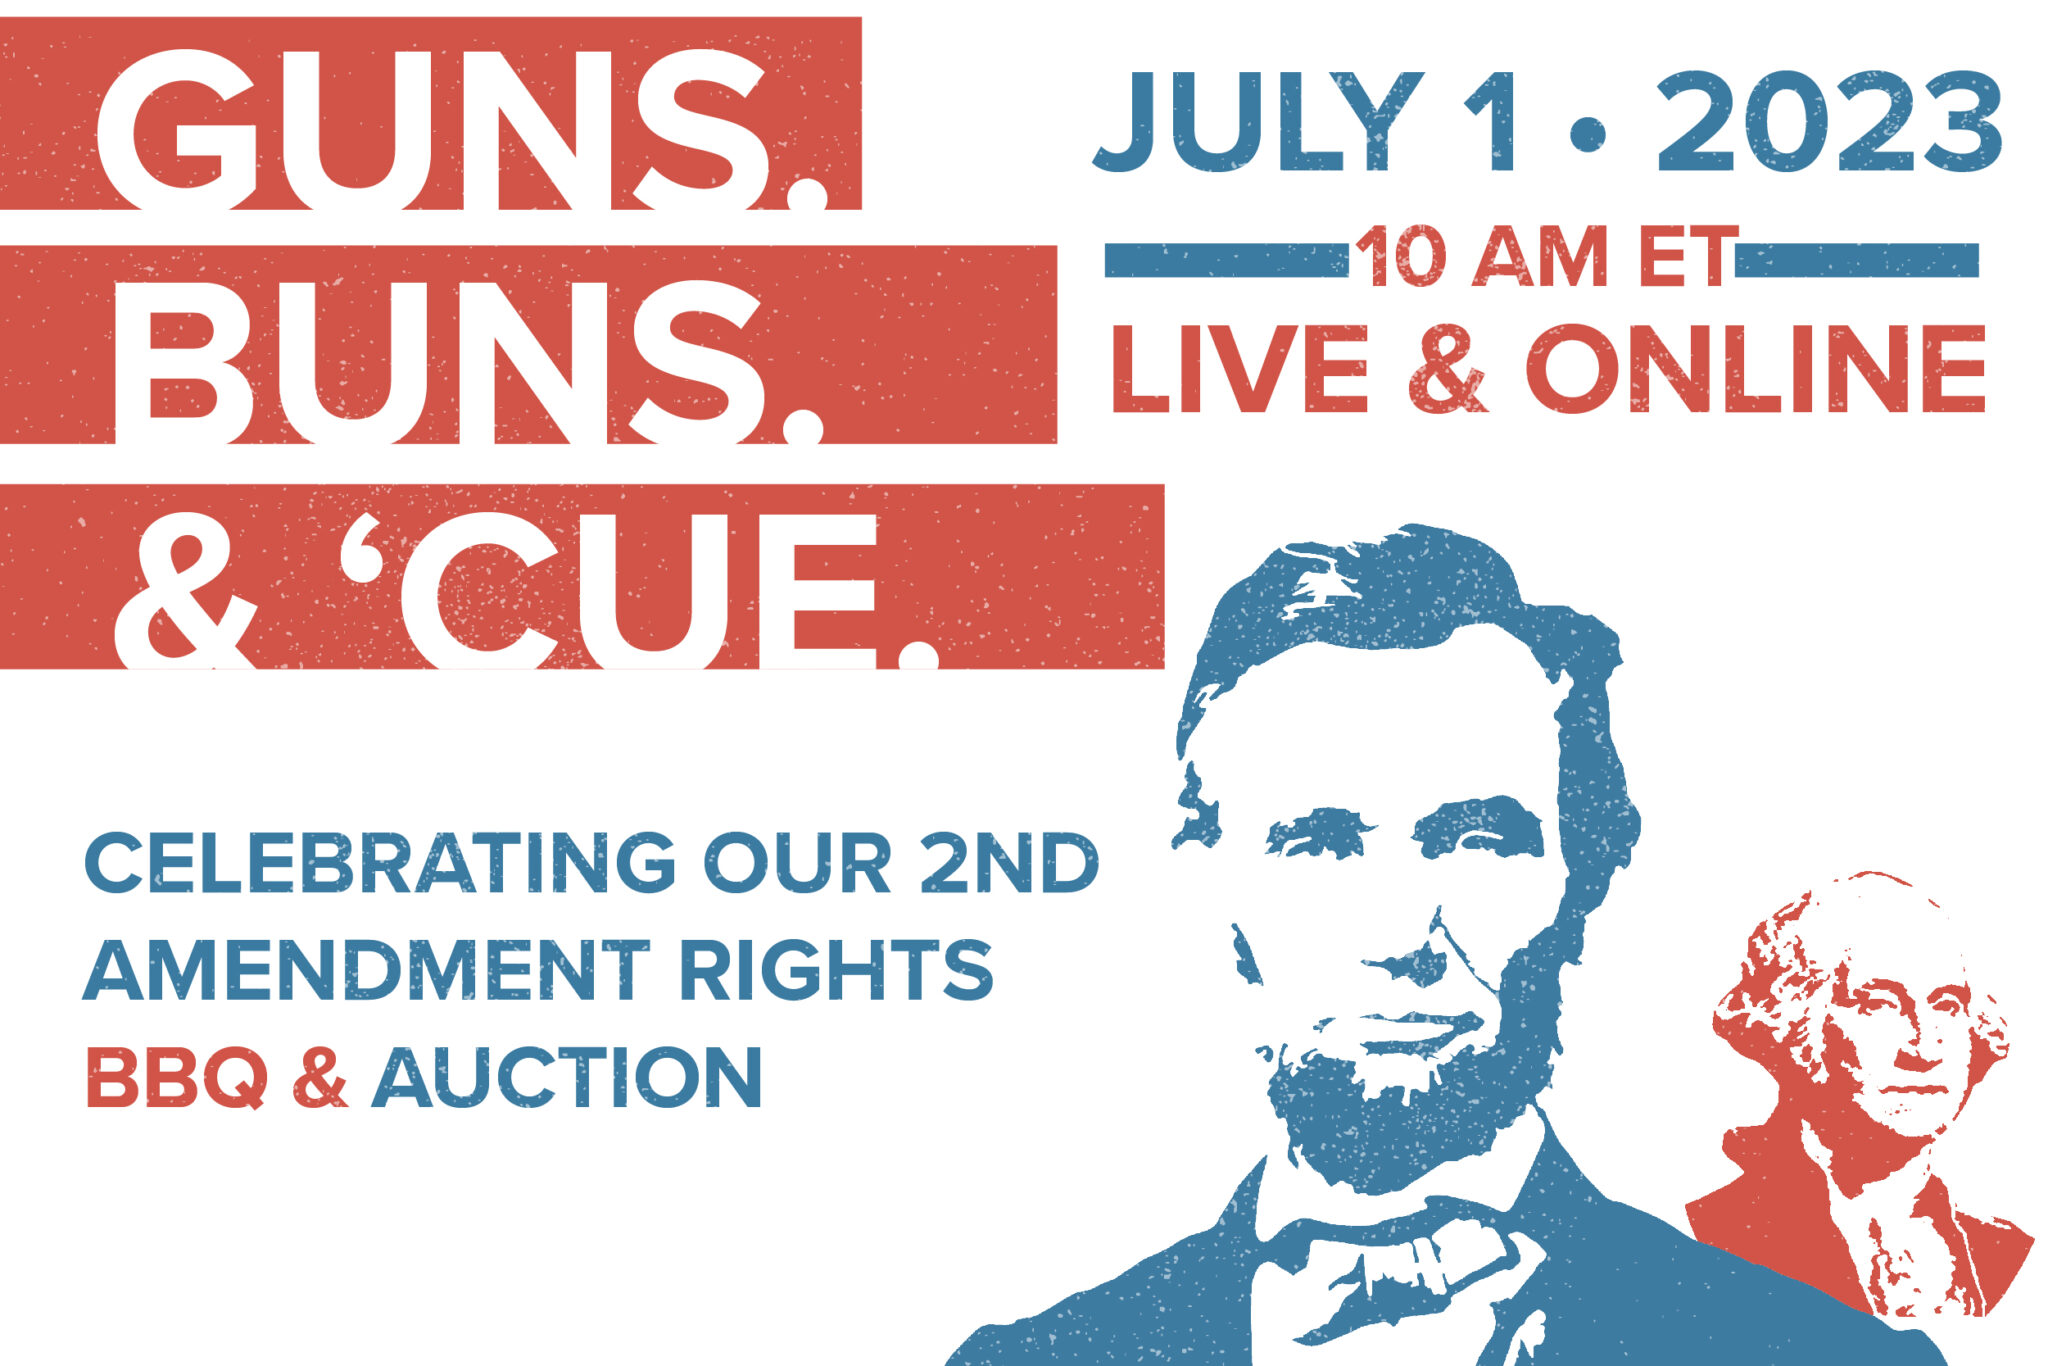 Guns, buns & cue, July 1, 2023